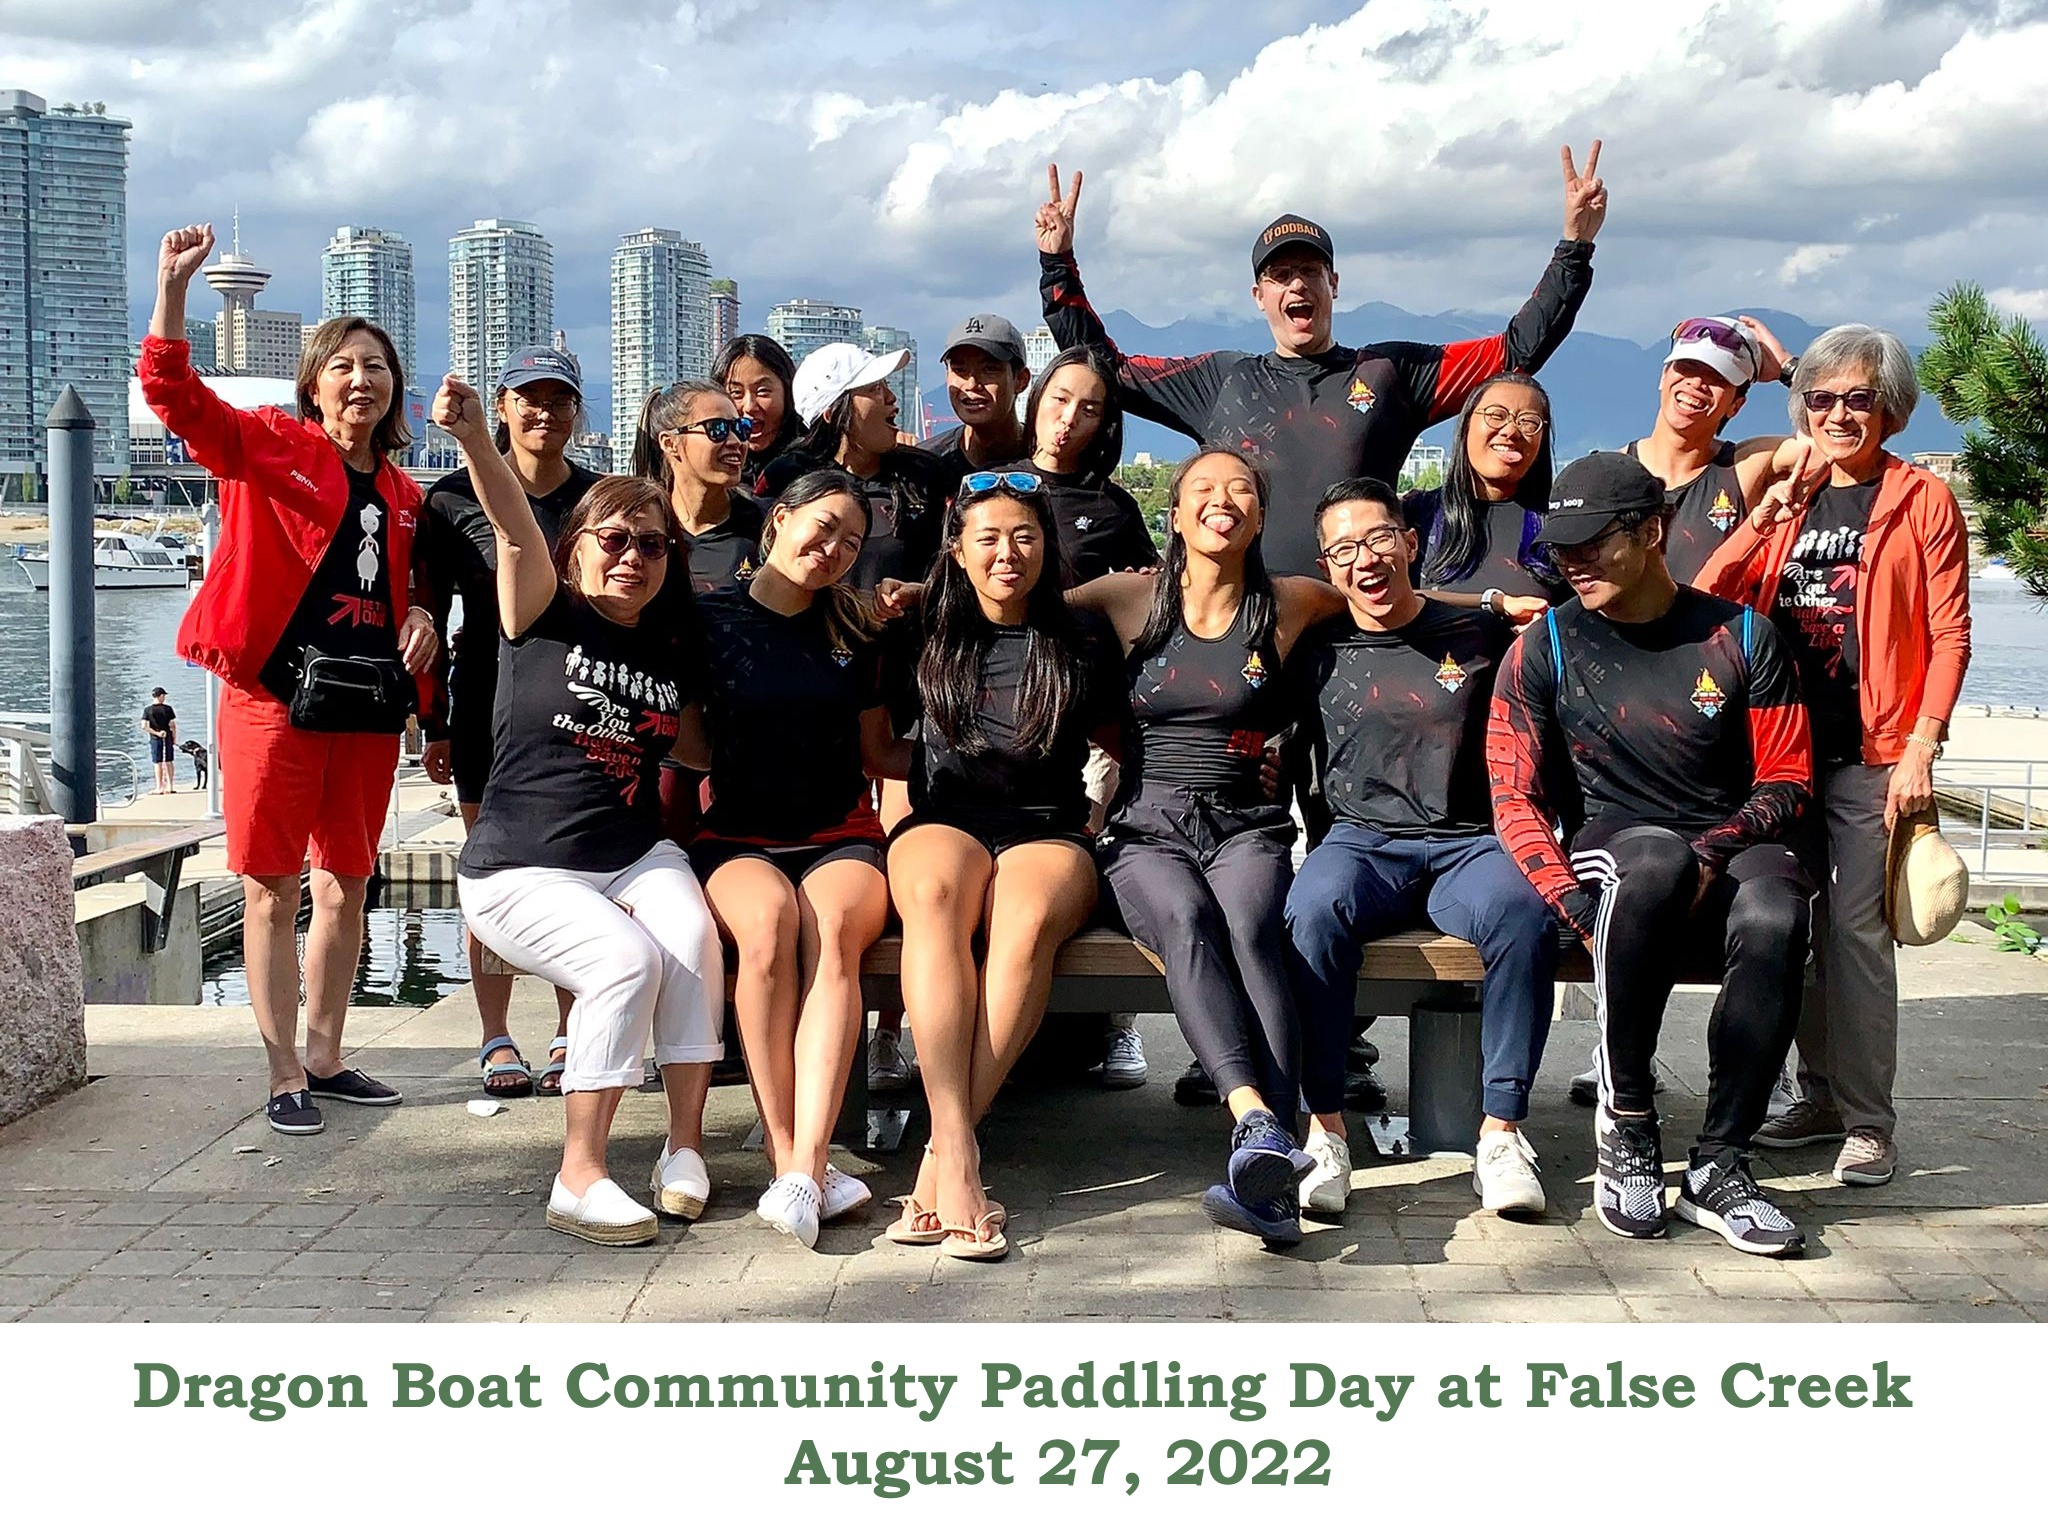 Dragon Boat Community Paddling Day at False Creek on August 27, 2022